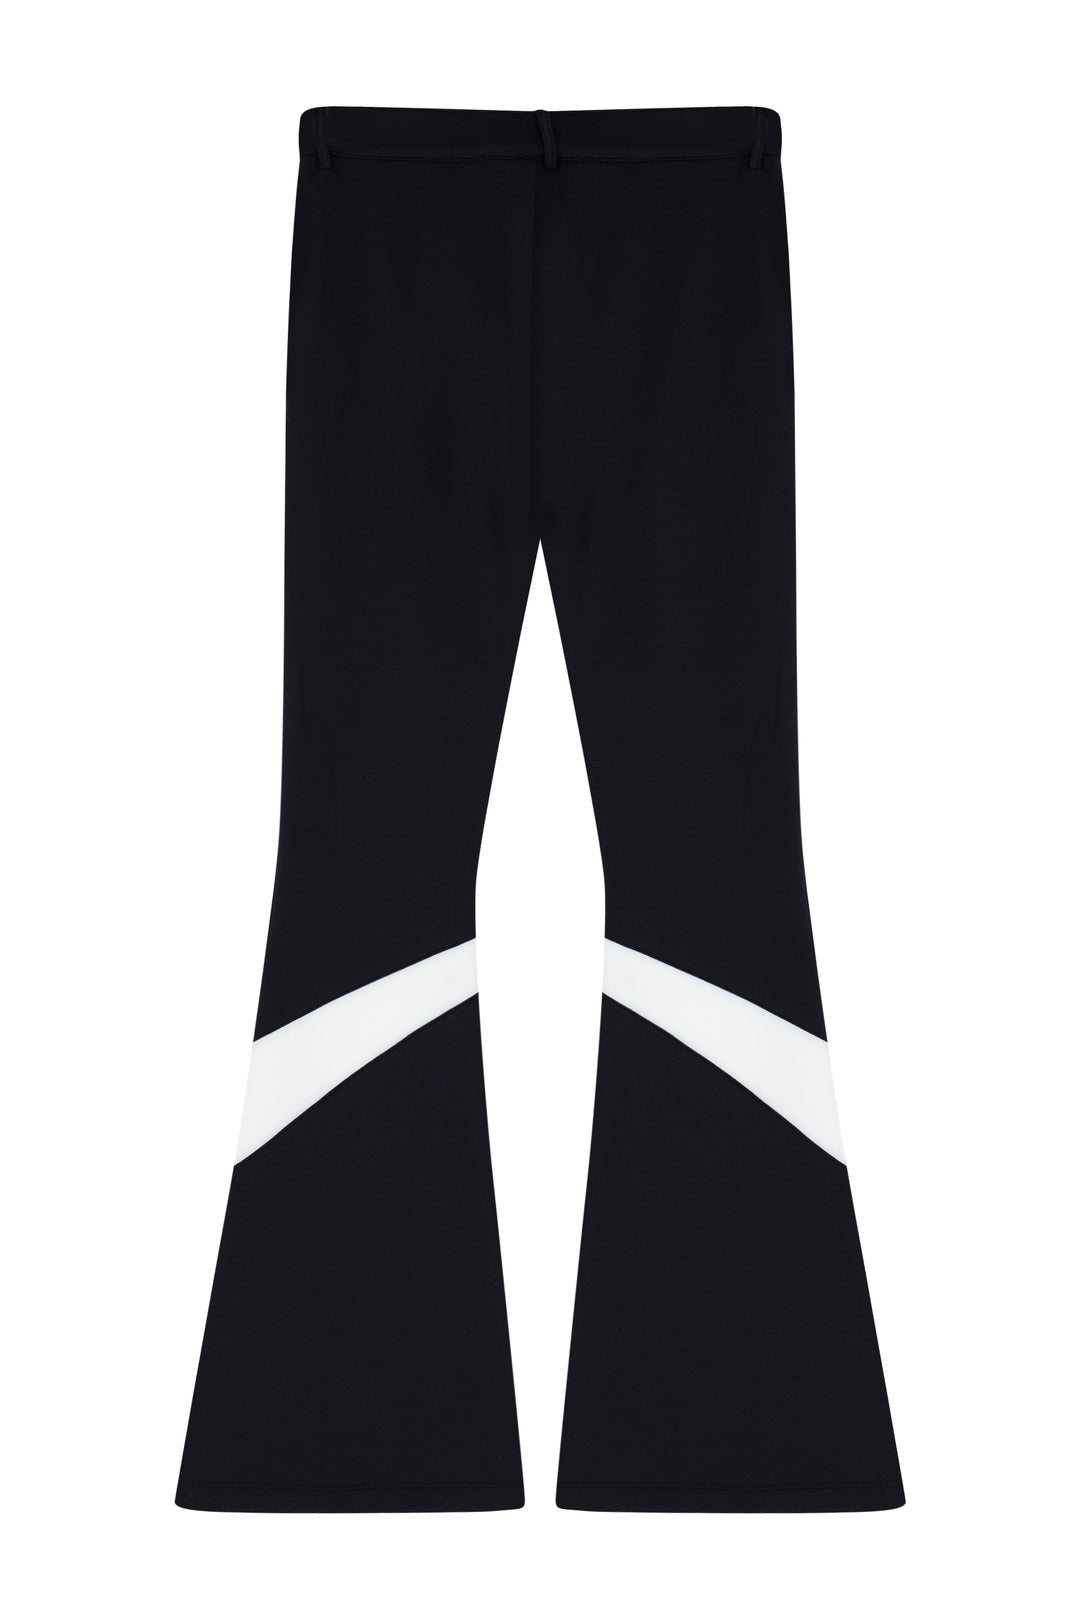 Black Contrast Ski Pants